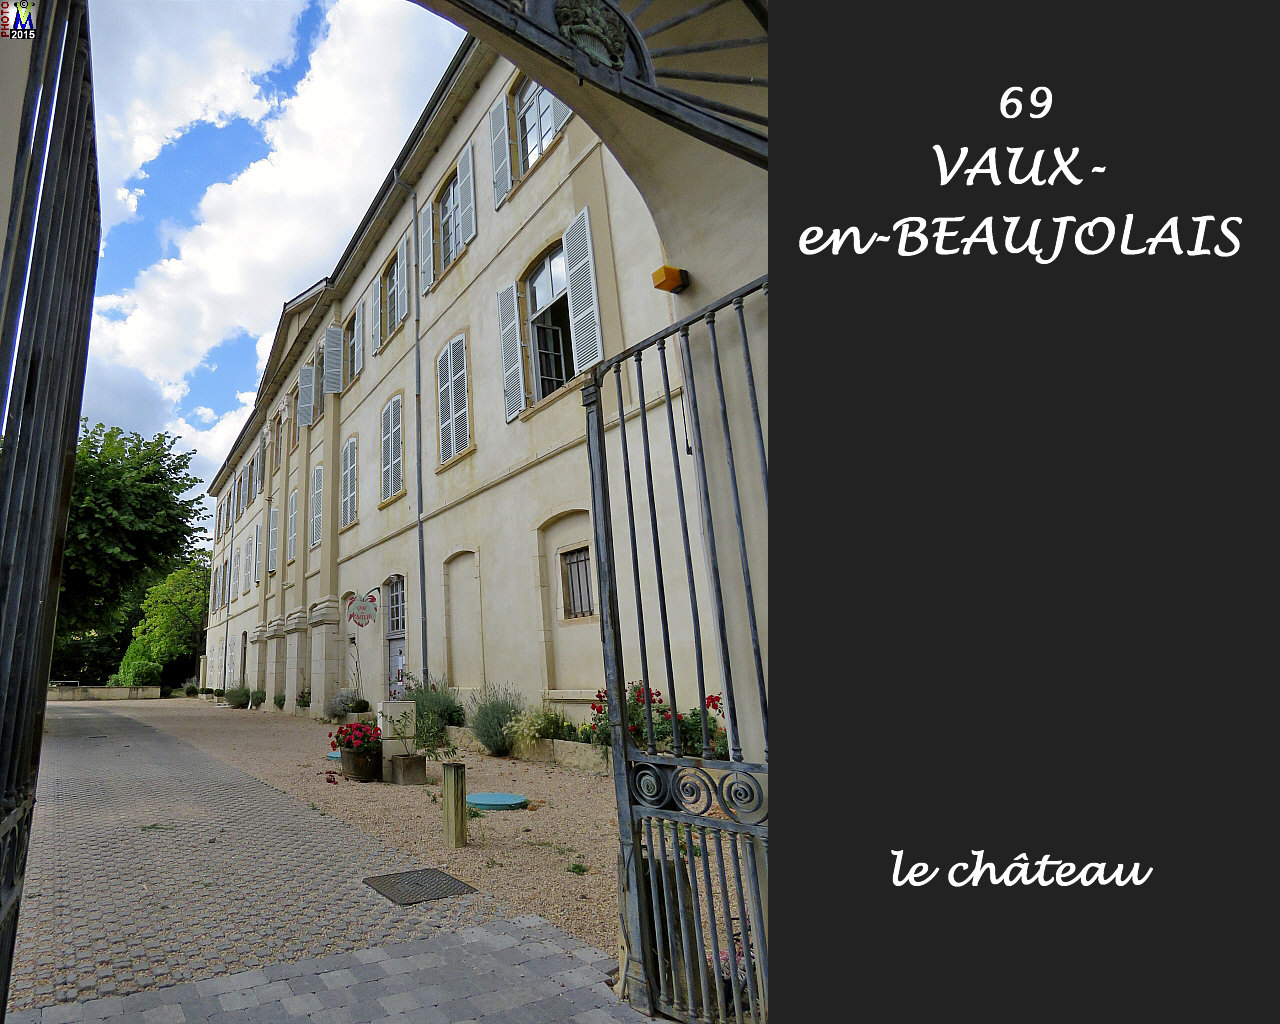 69VAUX-BEAUJOLAIS_chateau_102.jpg